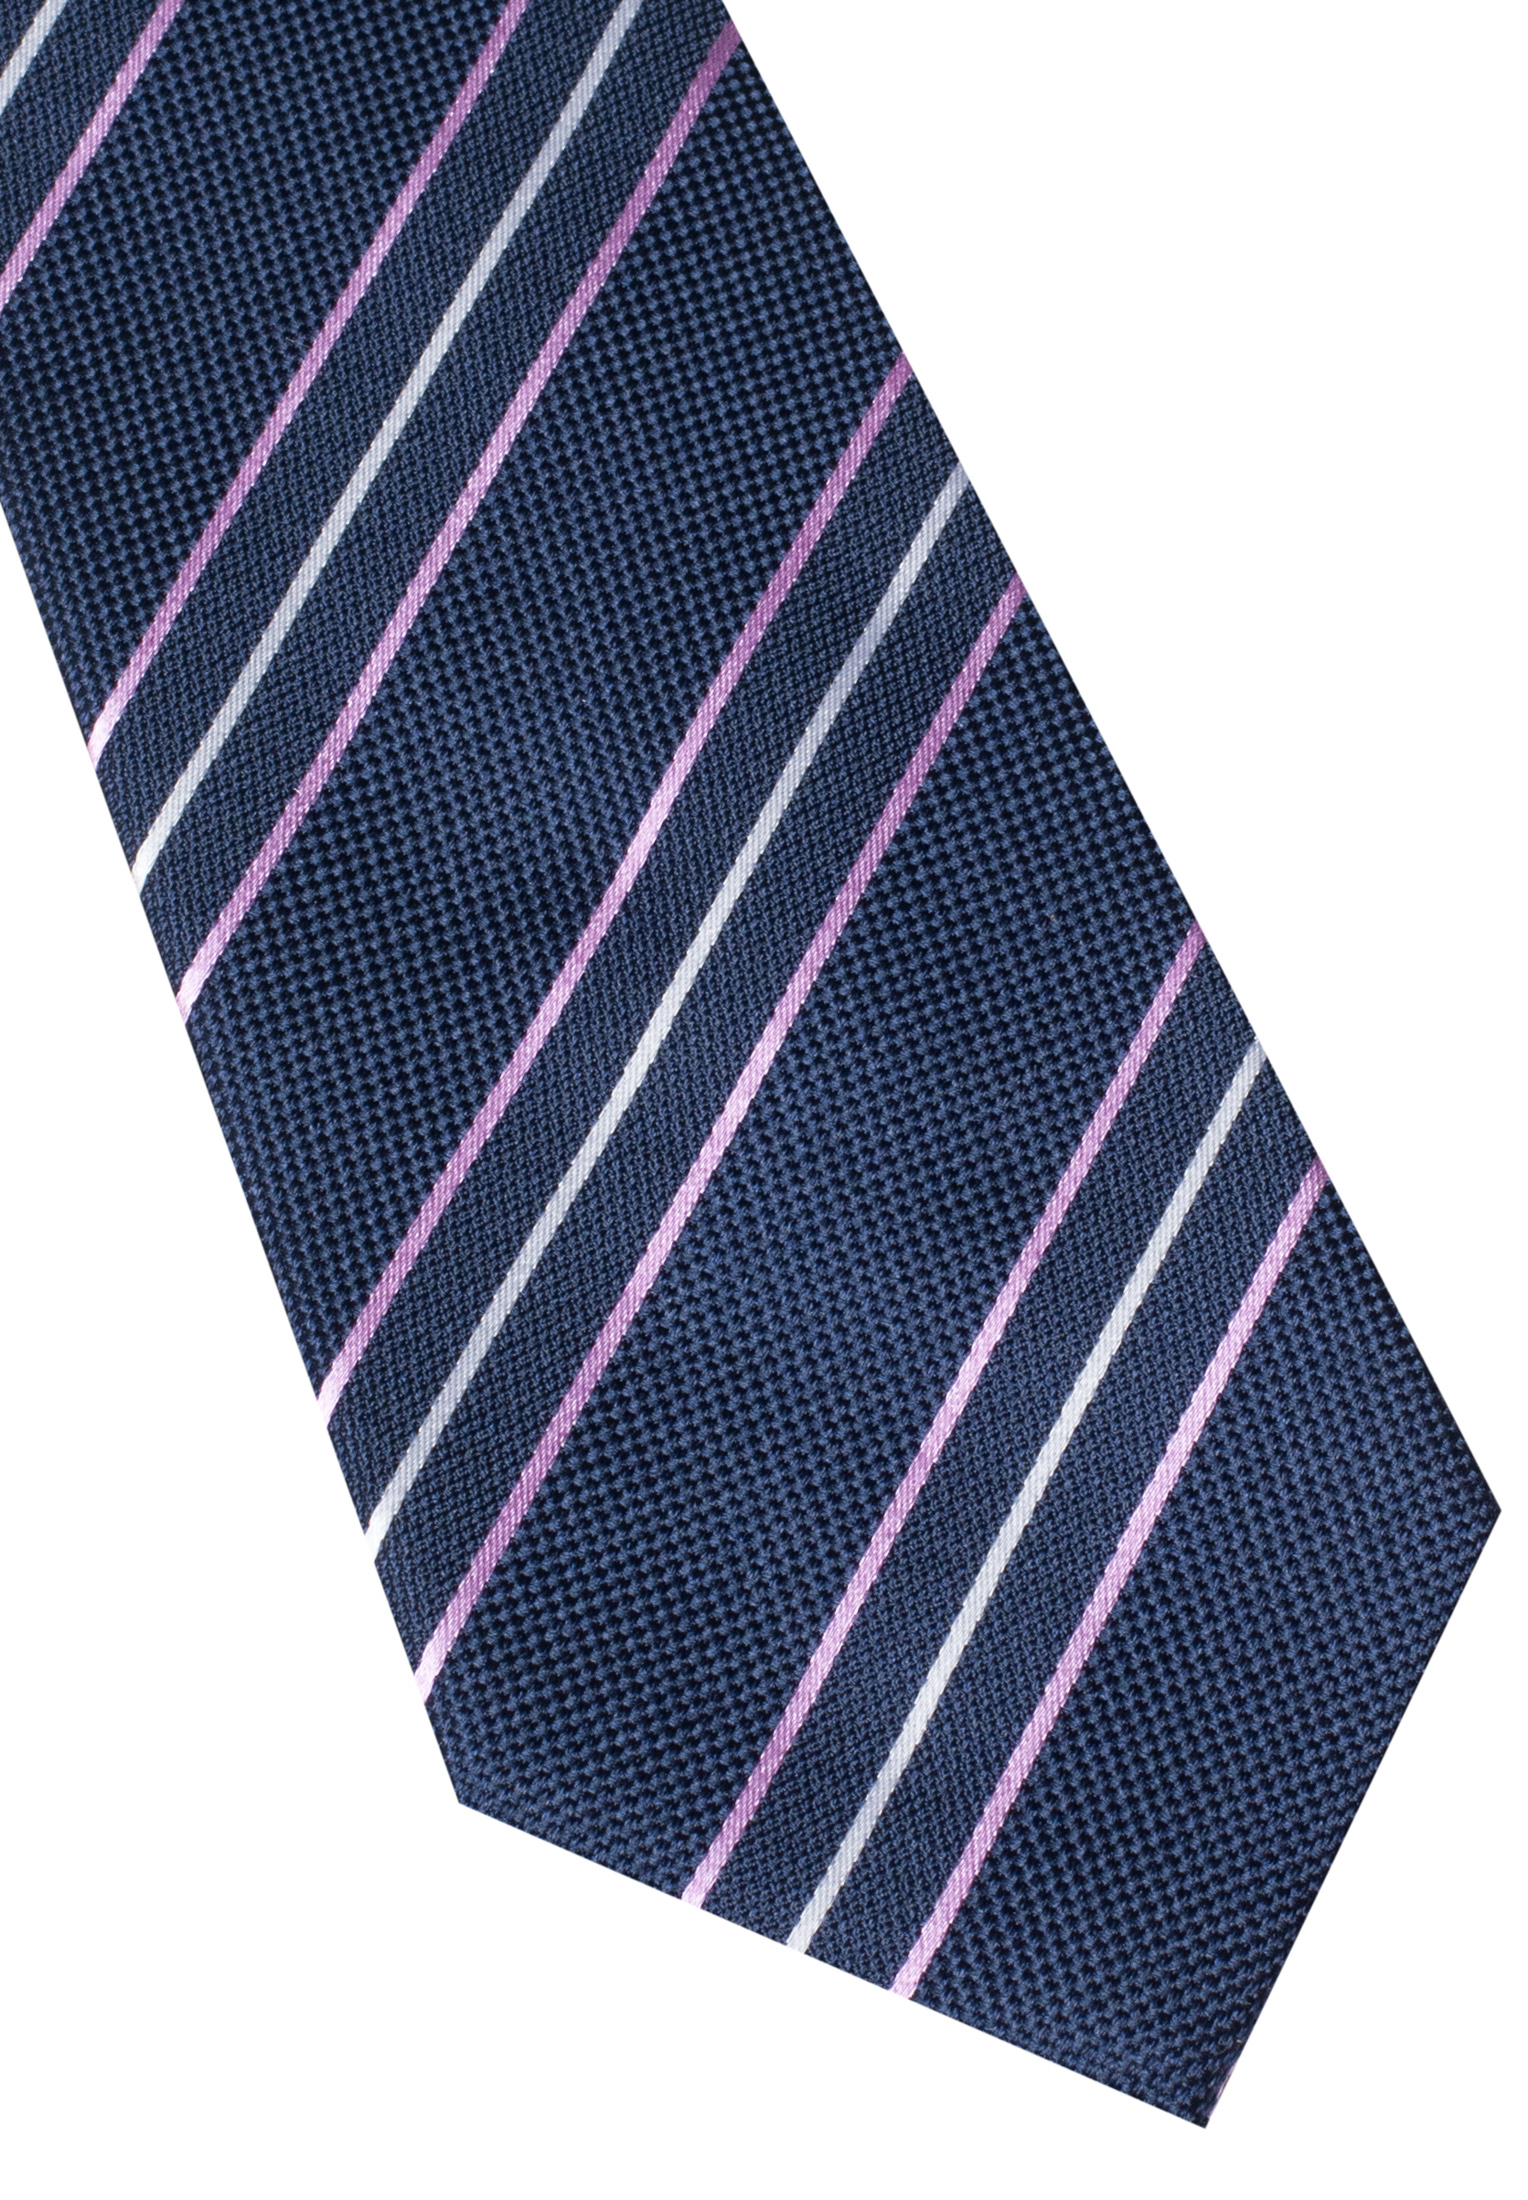 Krawatte in navy/rot gestreift | 1AC00533-81-89-142 navy/rot | 142 